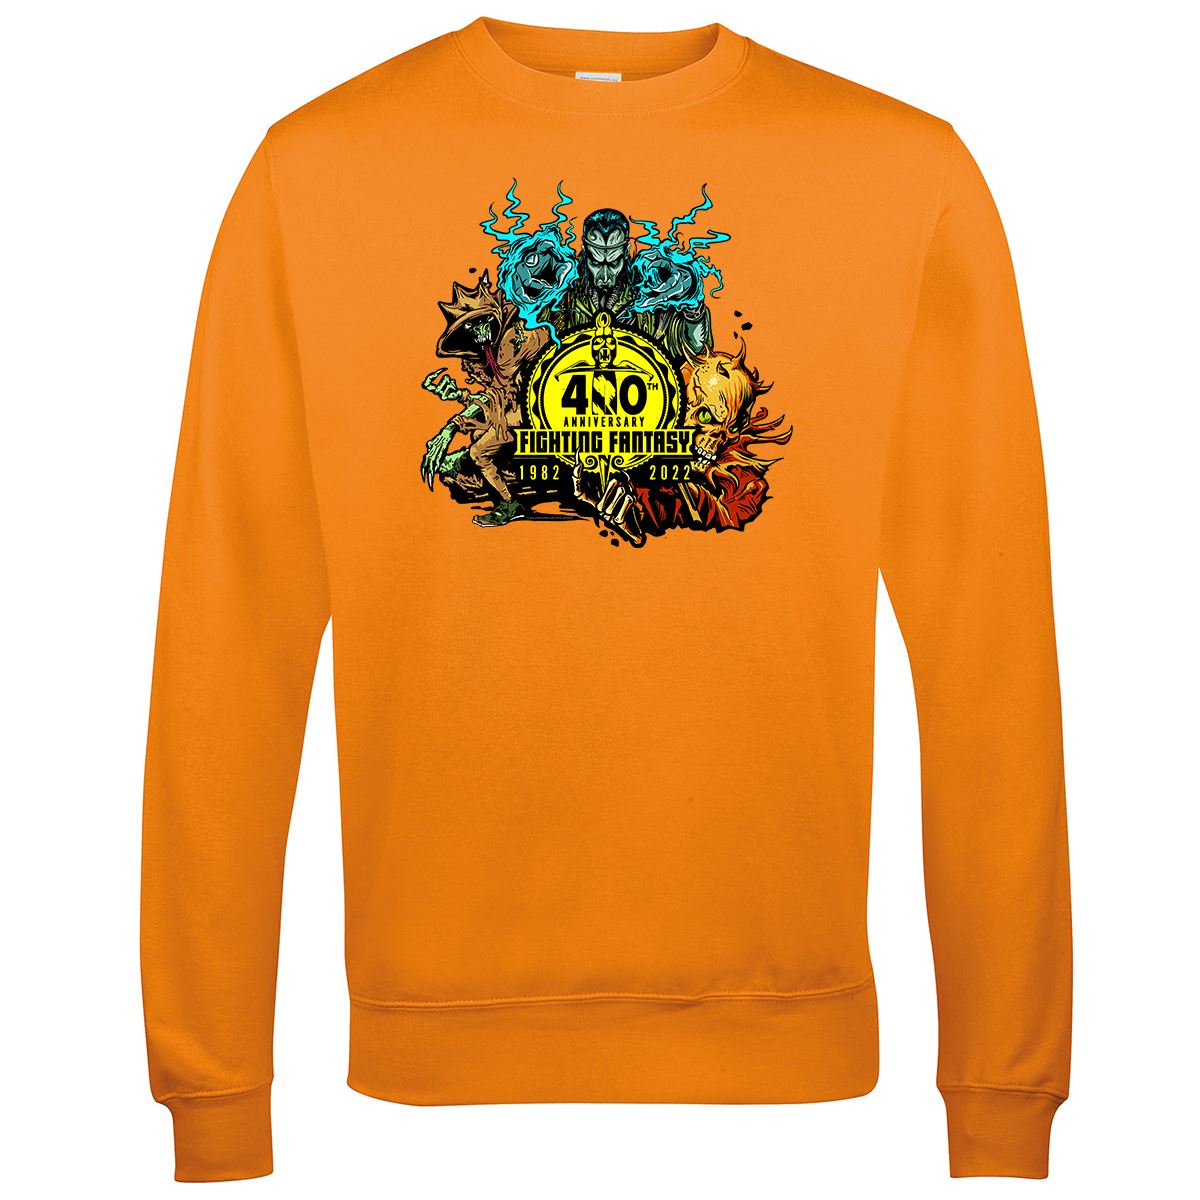 Fighting Fantasy 40th Anniversary Retro Gaming Sweatshirt Sweatshirt Seven Squared Small Orange Crush 